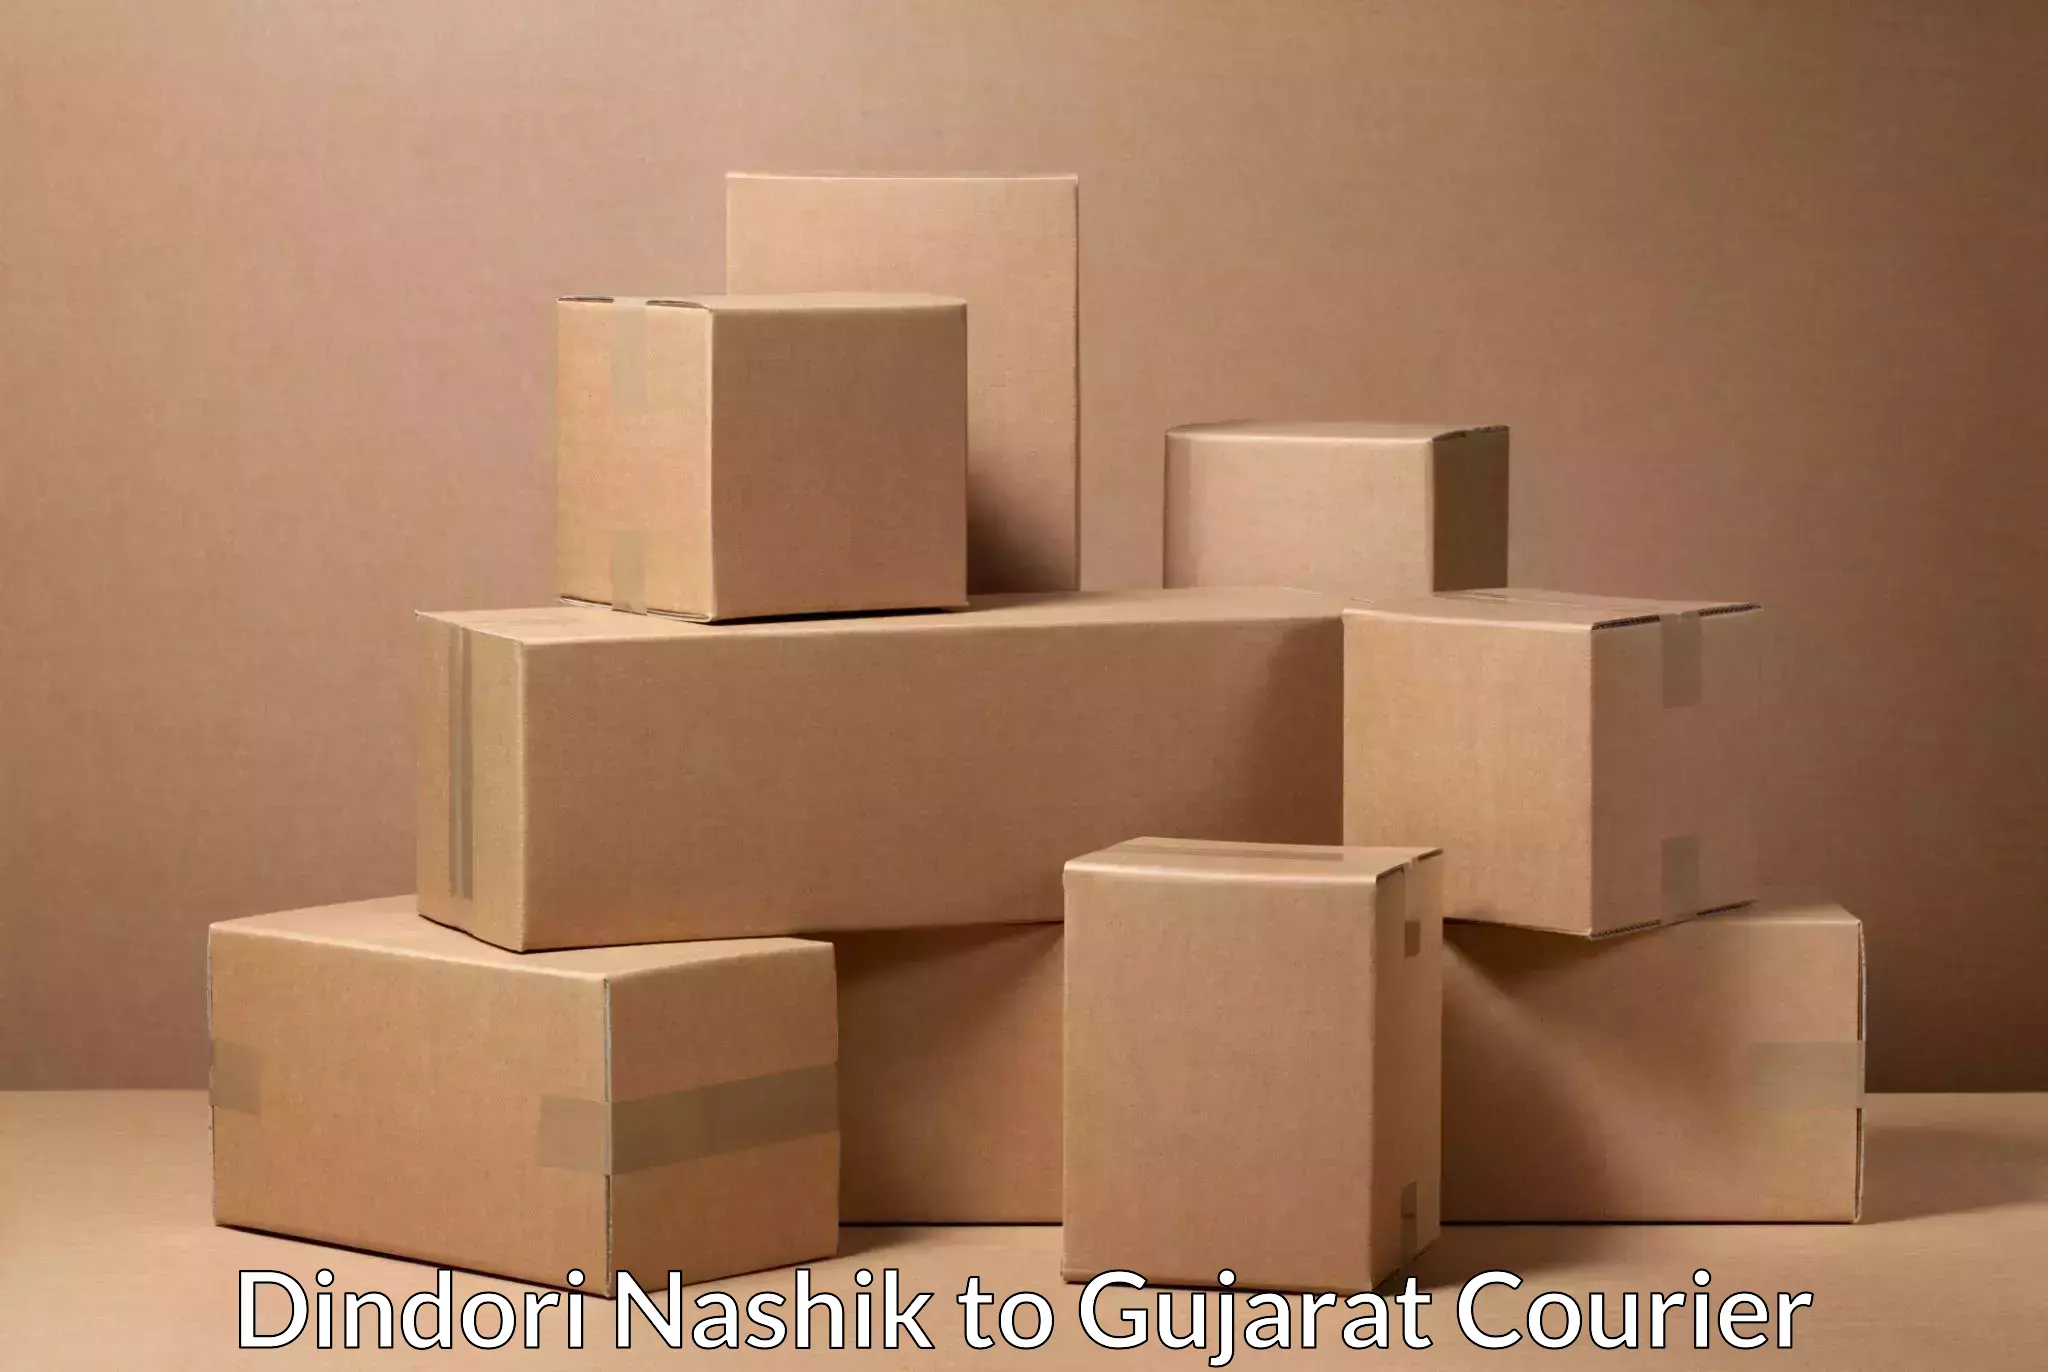 International courier networks Dindori Nashik to Gujarat